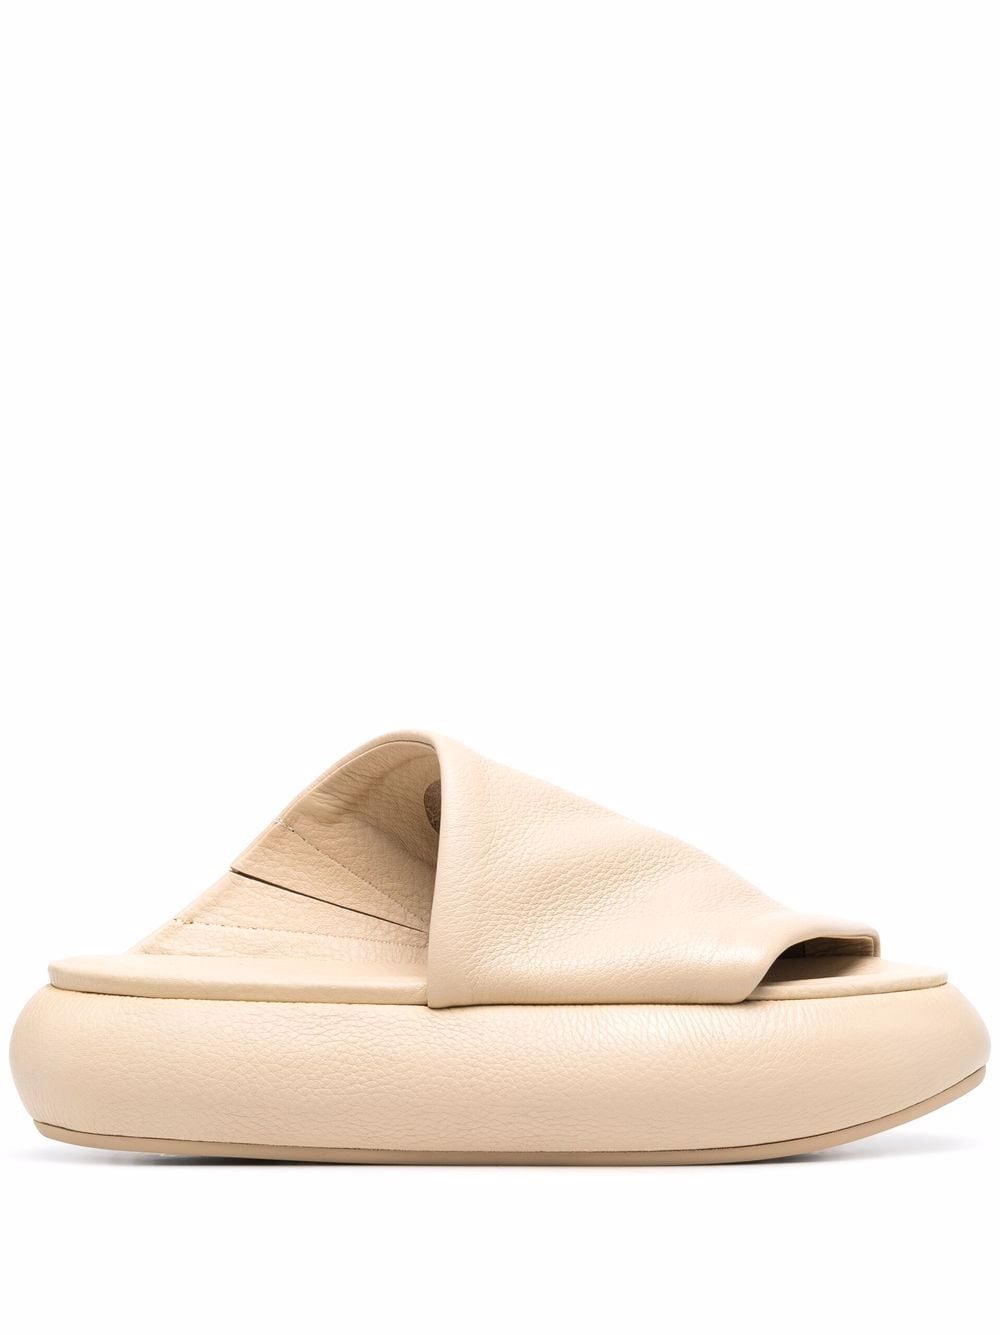 Marsèll asymmetric design sandals